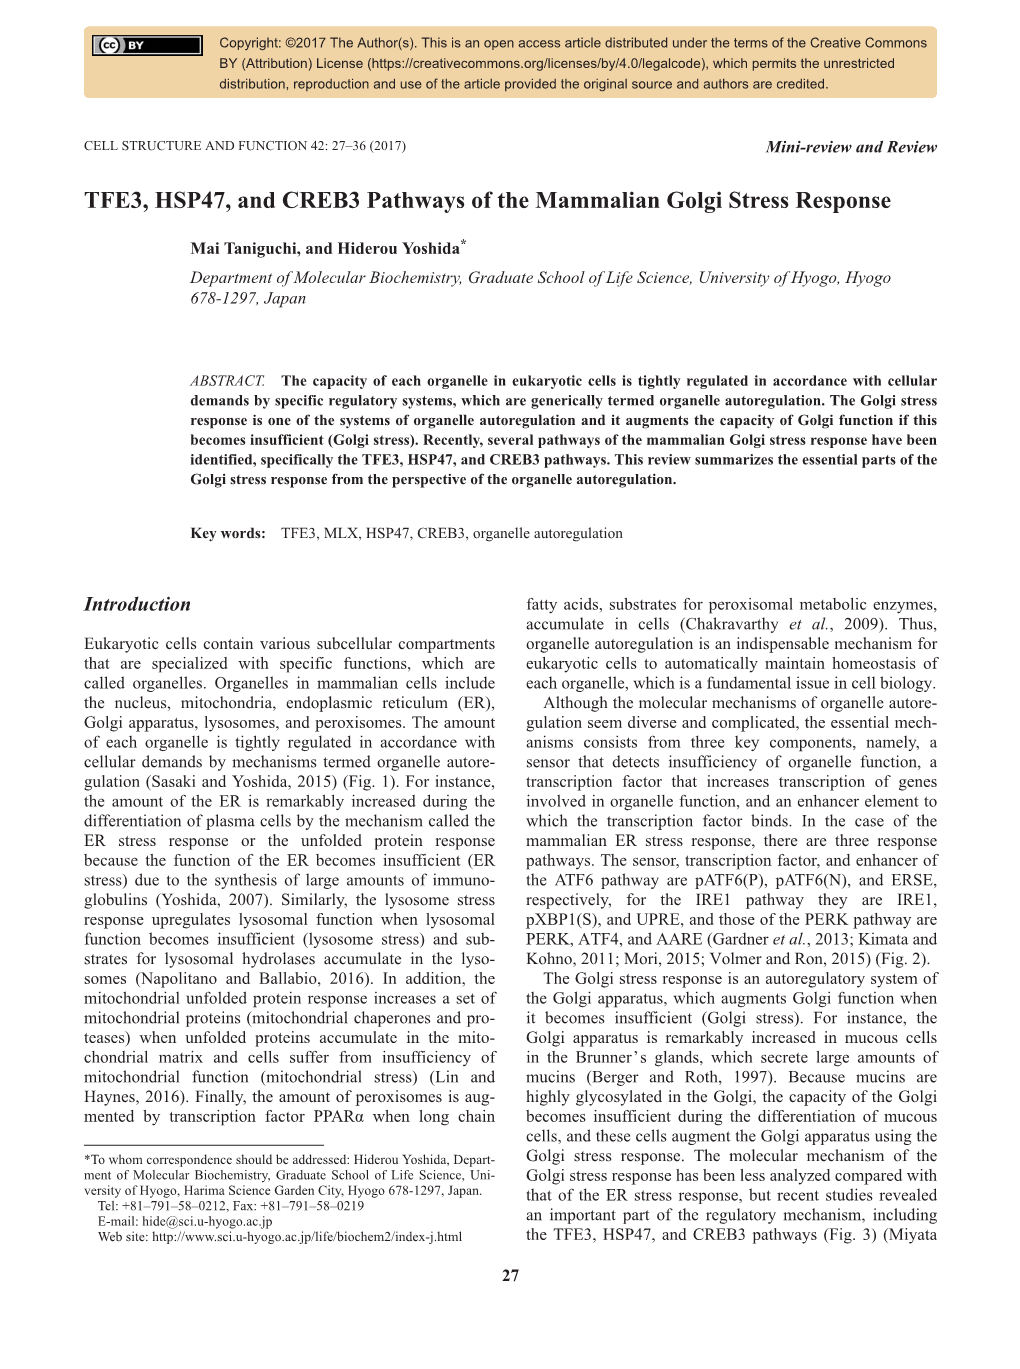 TFE3, HSP47, and CREB3 Pathways of the Mammalian Golgi Stress Response